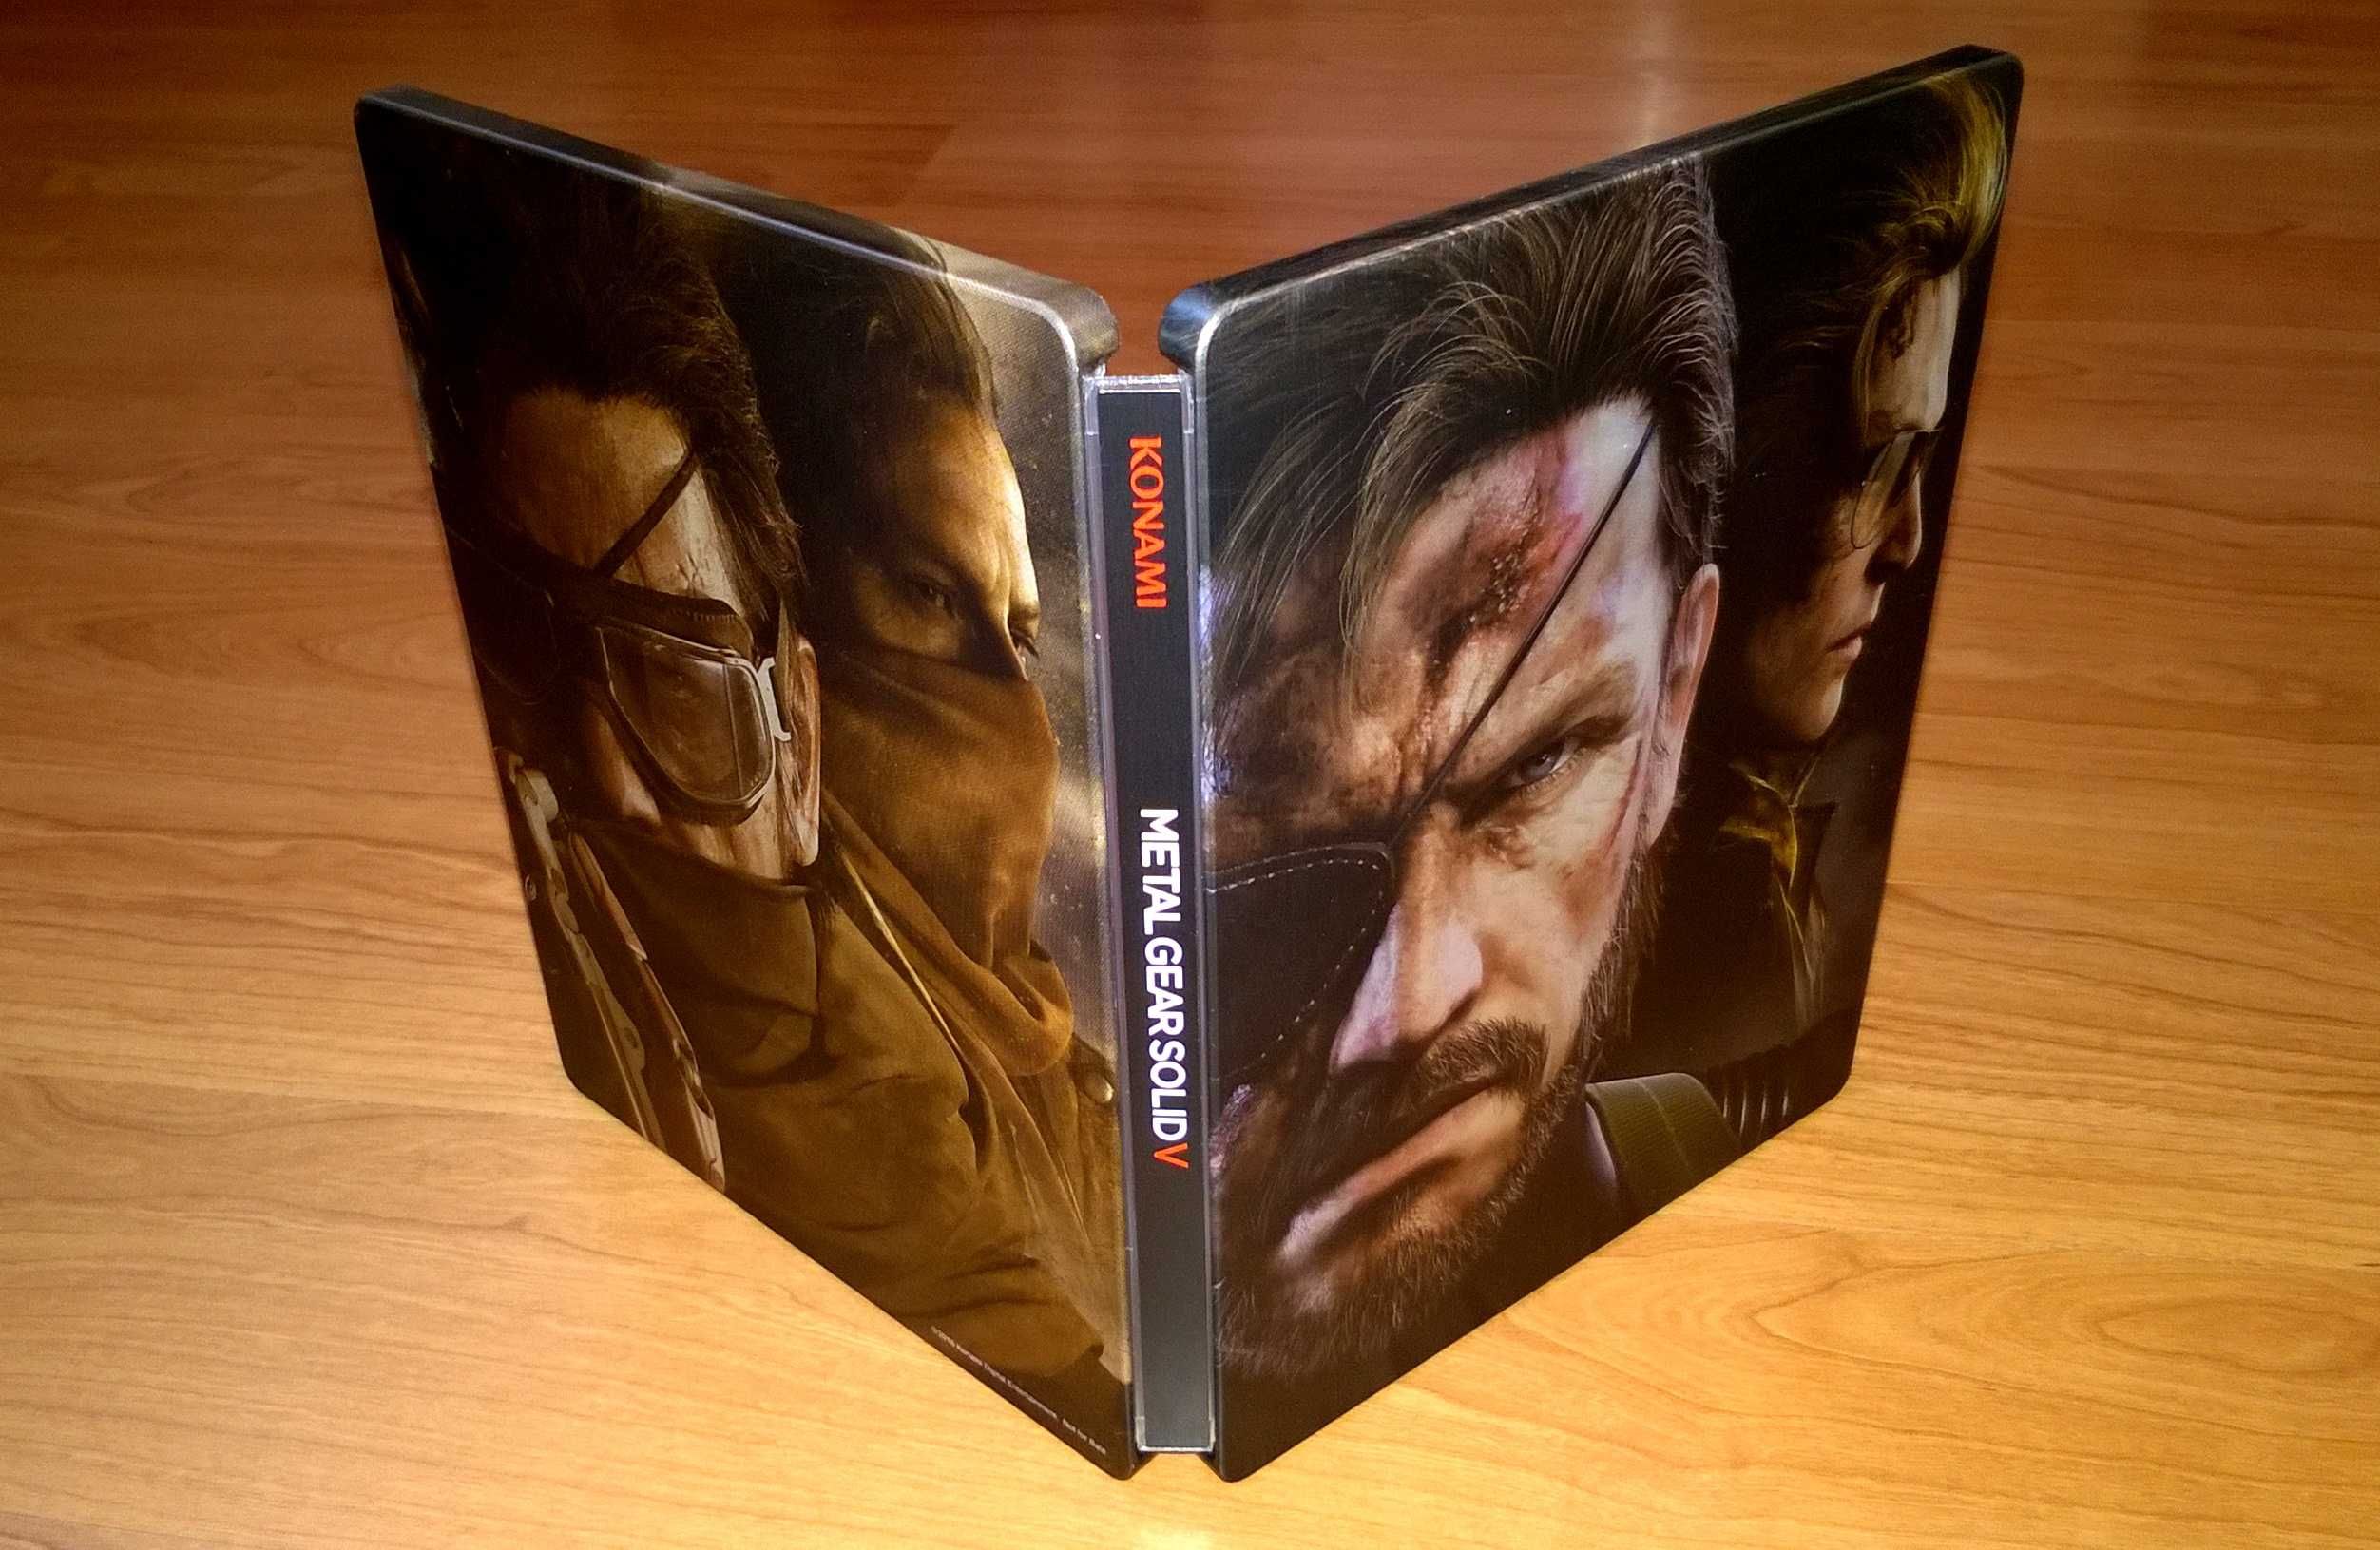 Steelbook-uri Metal Gear Solid V + AC Syndicate